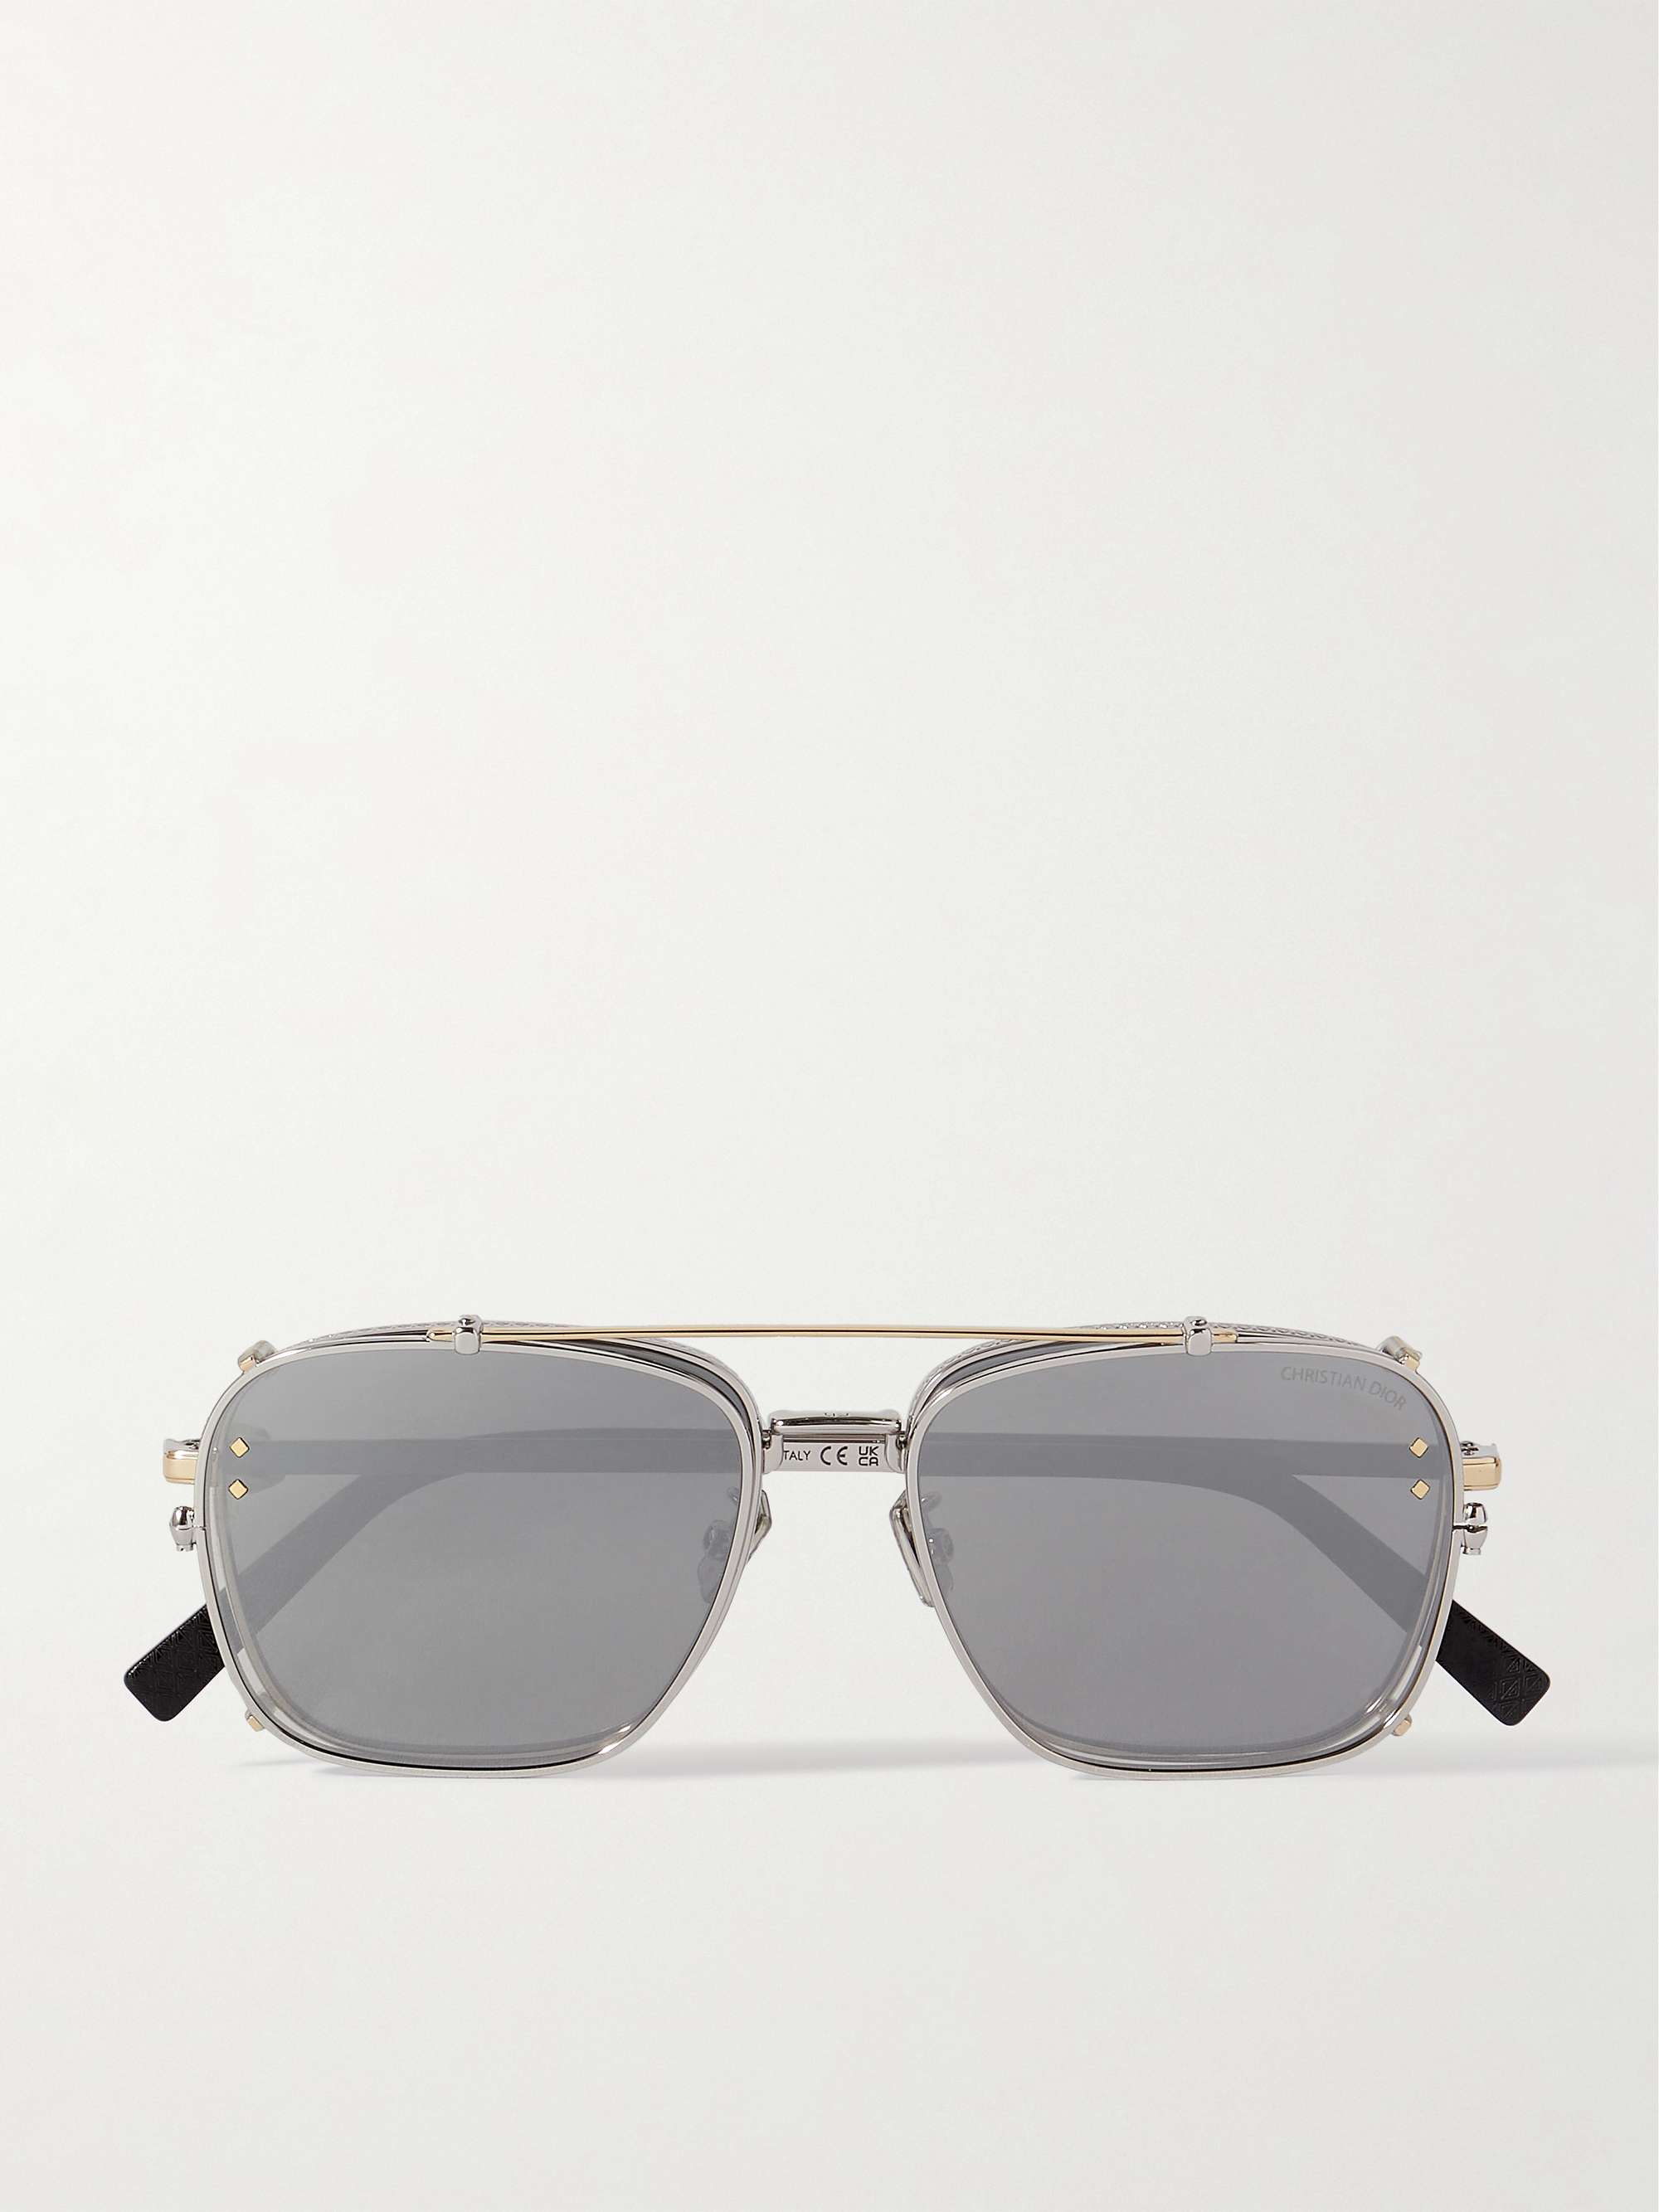 DIOR EYEWEAR Dior90 S1U Rectangular-Frame Silver-Tone Sunglasses 